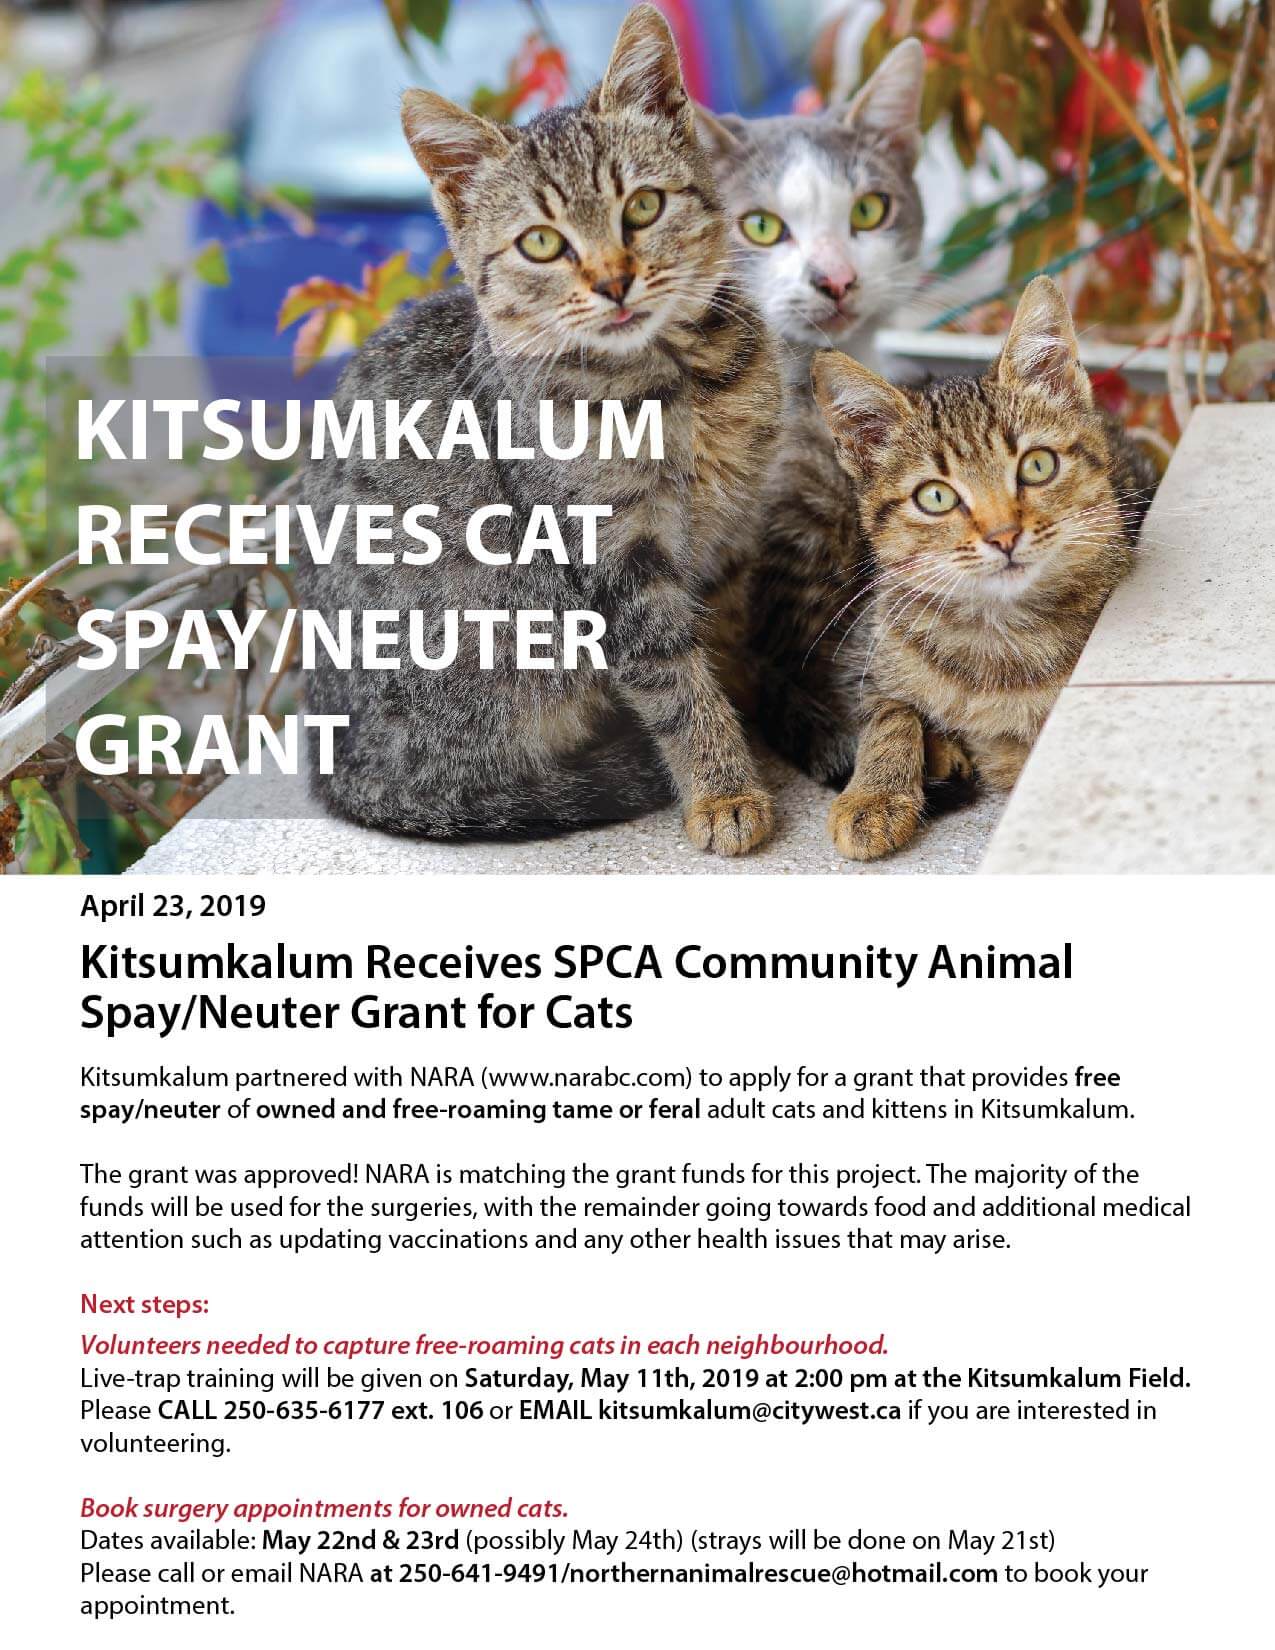 Kitsumkalum Receives Cat Spay/Neuter Grant